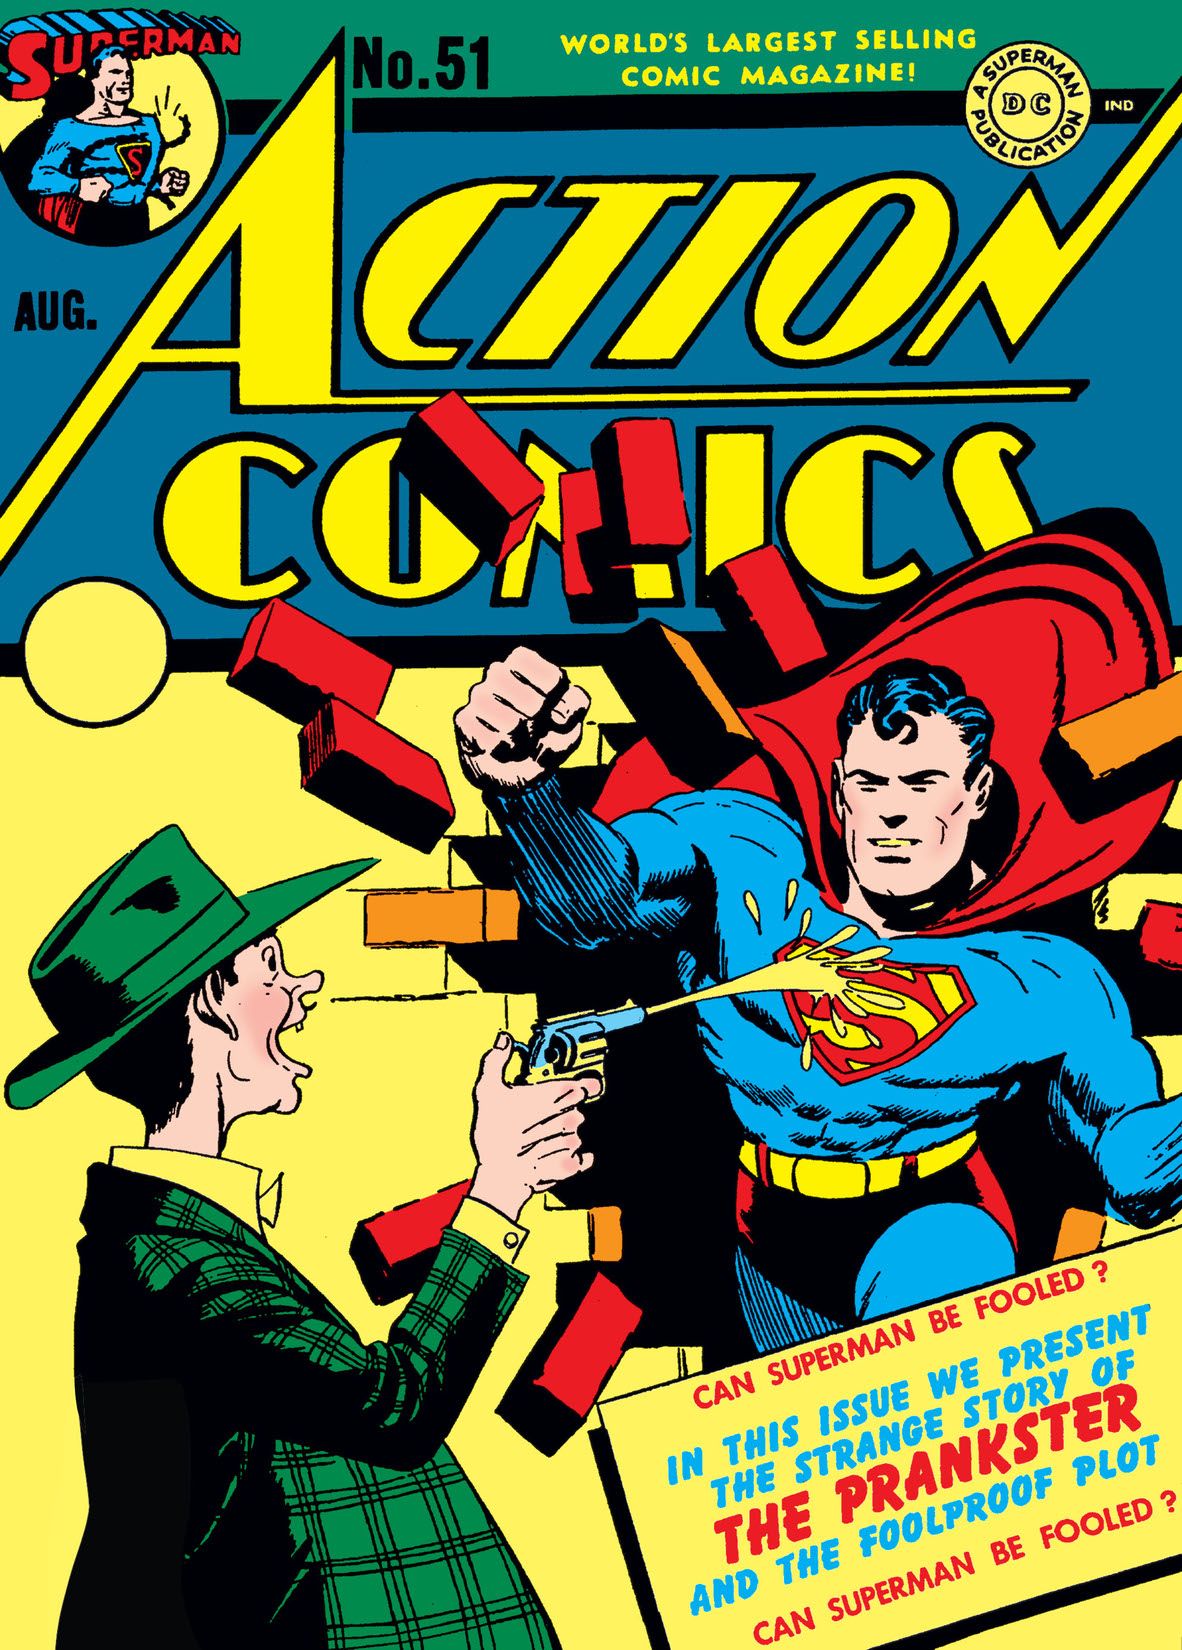 Action Comics (1938-) #51 preview images